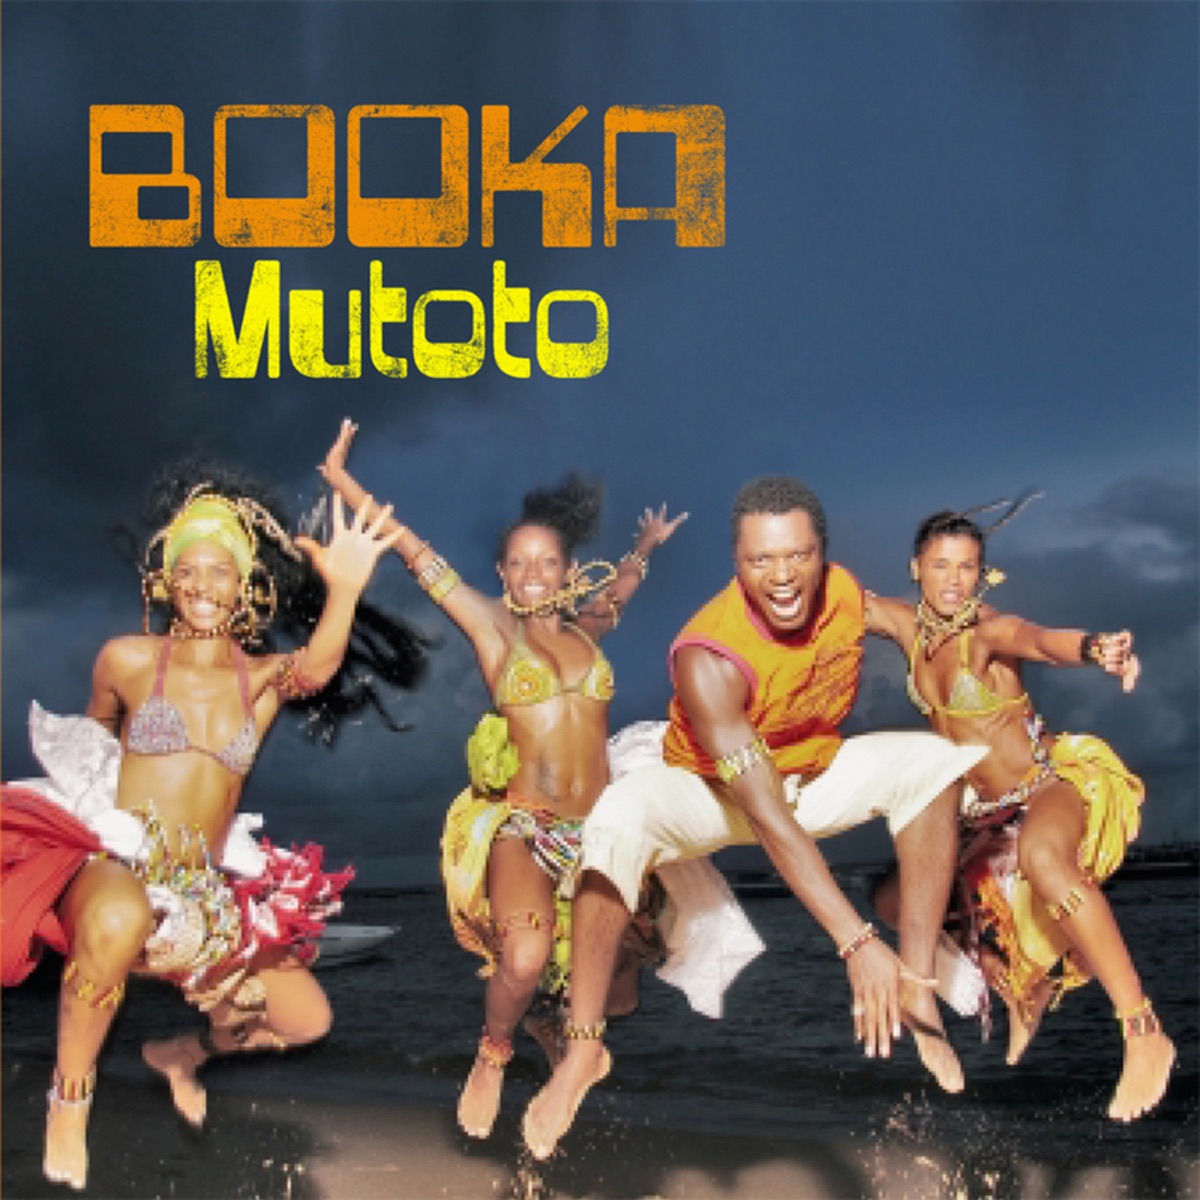 Mutoto - Album by Booka - Apple Music